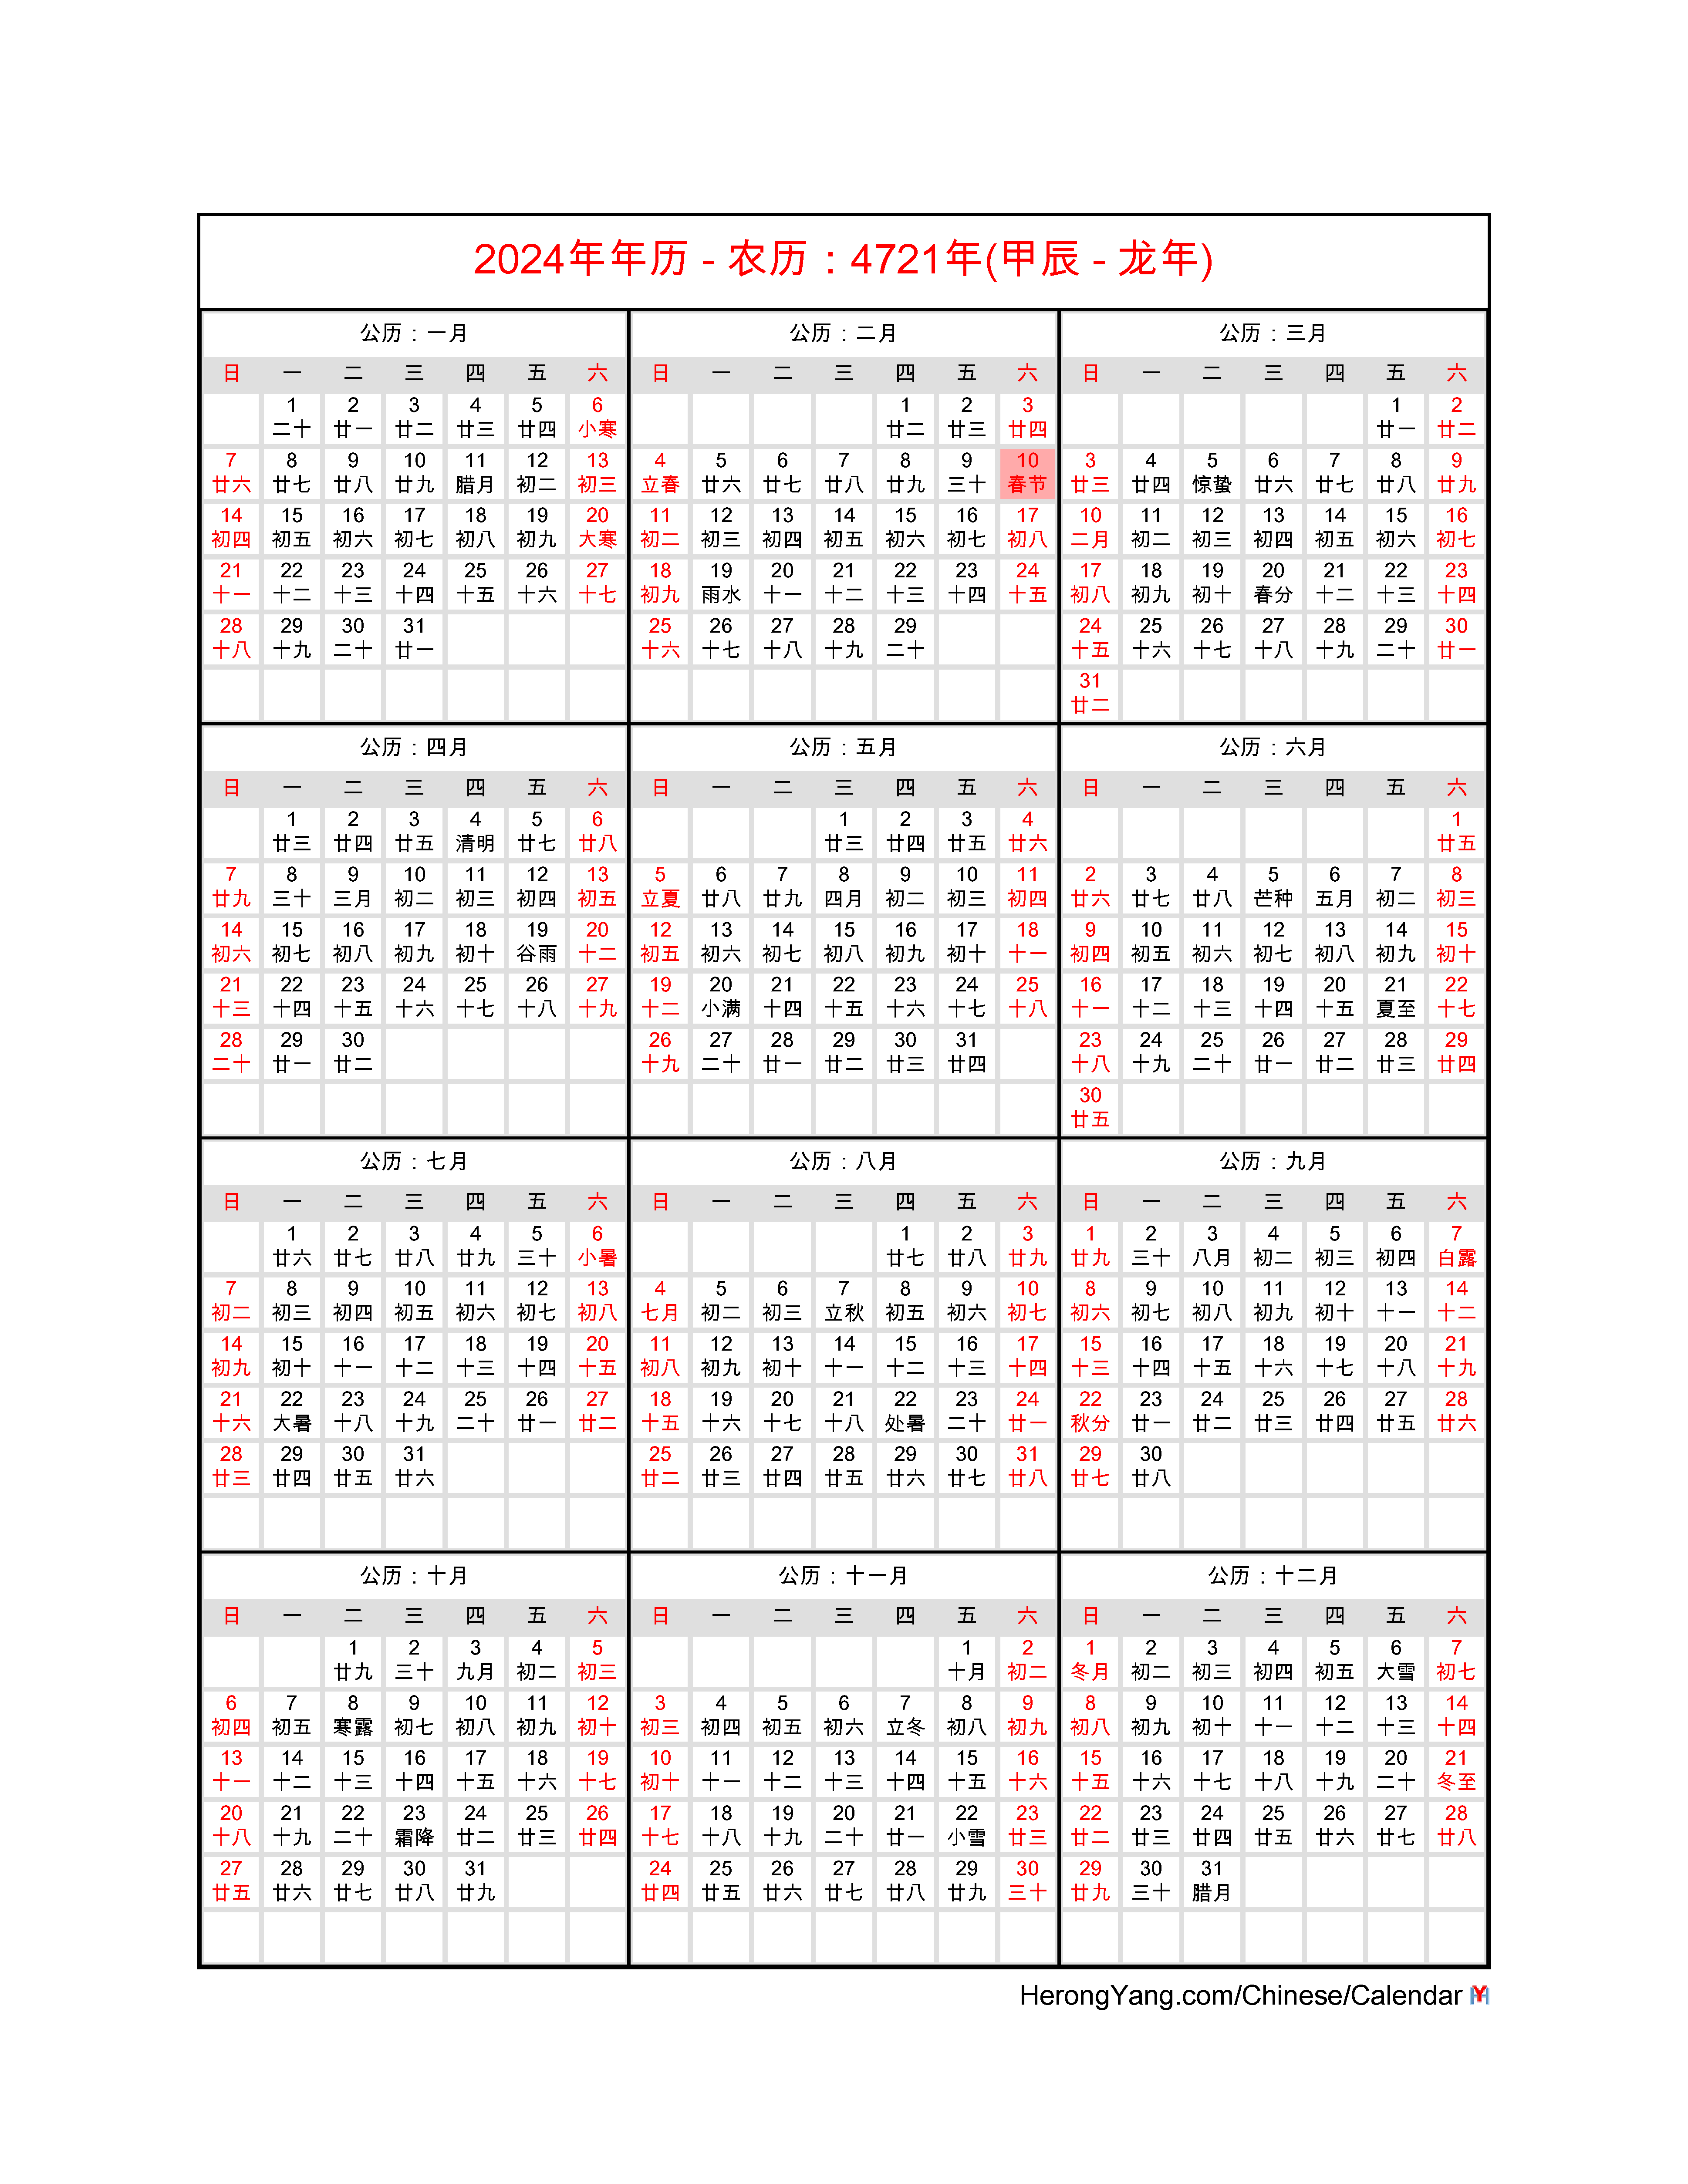 Lunar Calendar Definition 2024 Best Ultimate Popular List of February